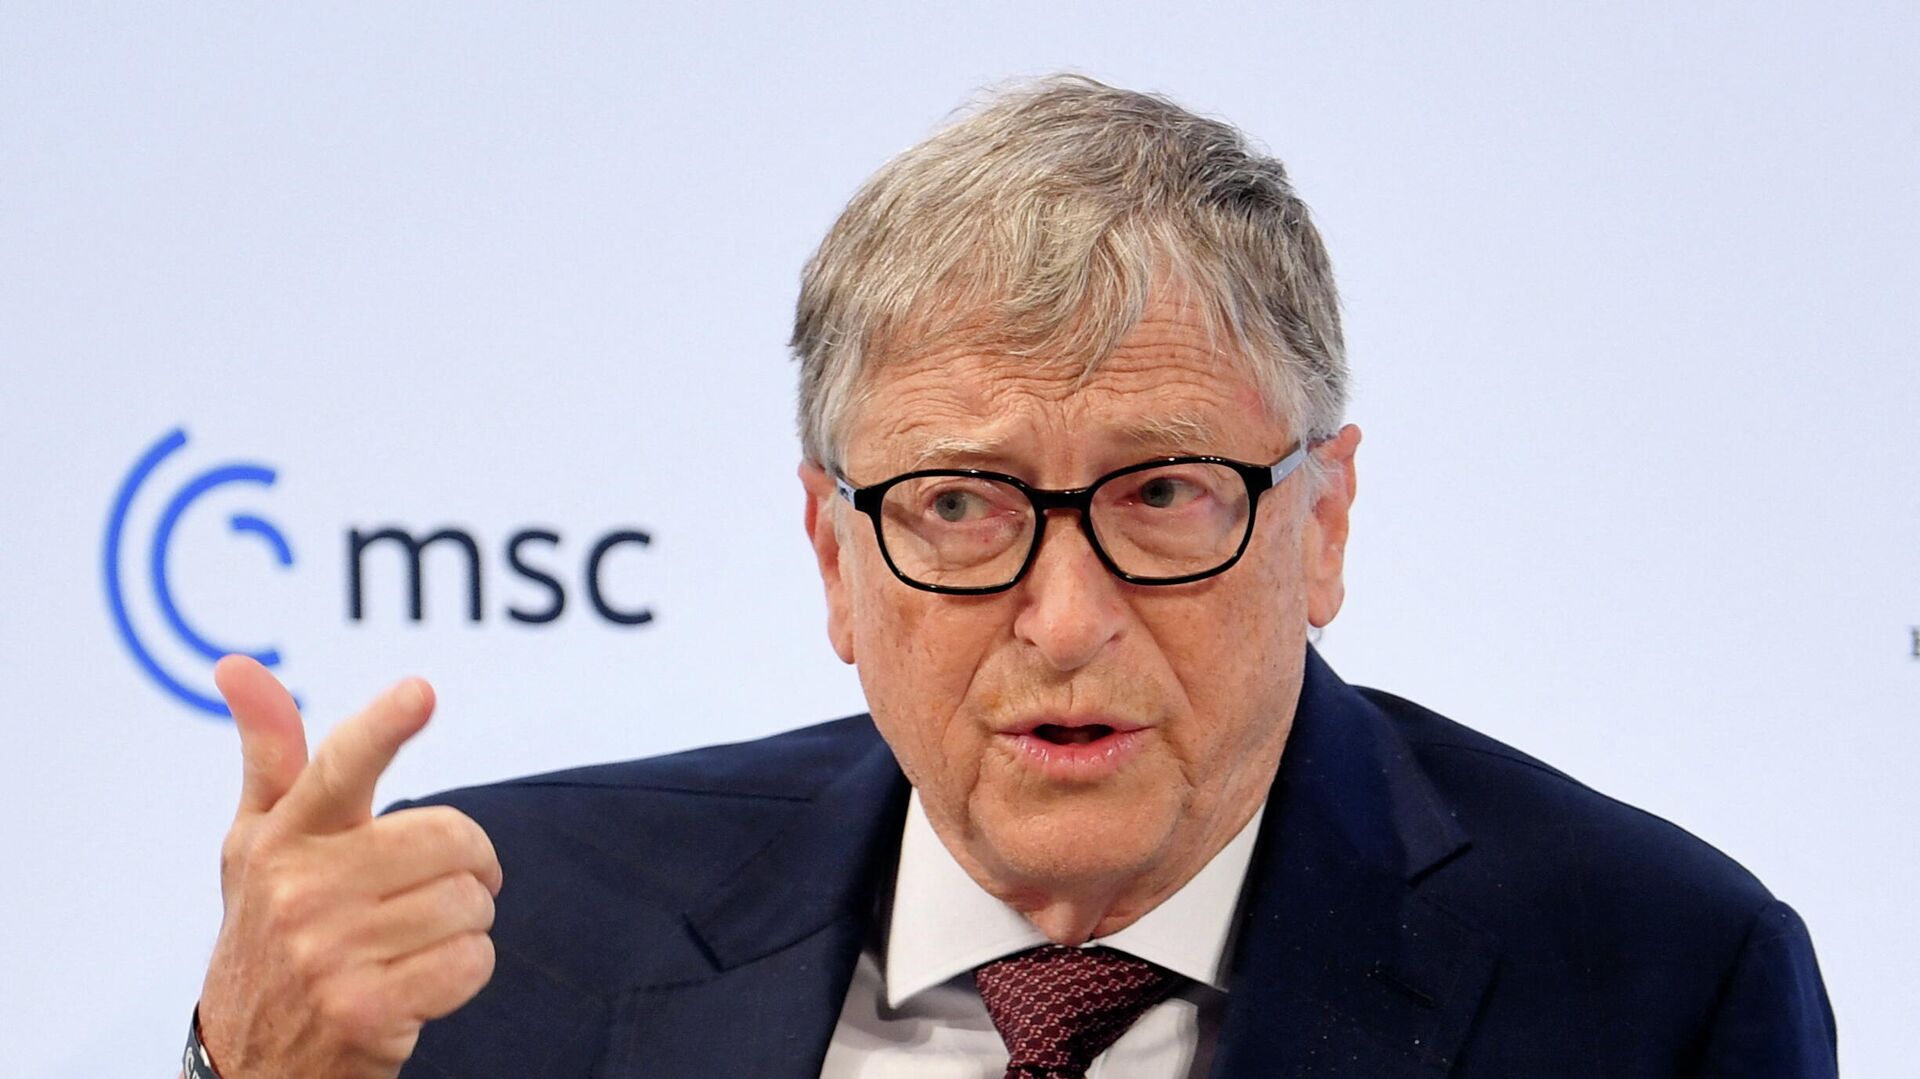 American businessman Bill Gates gestures during the annual Munich Security Conference, in Munich, Germany February 18, 2022. - Sputnik International, 1920, 18.02.2022